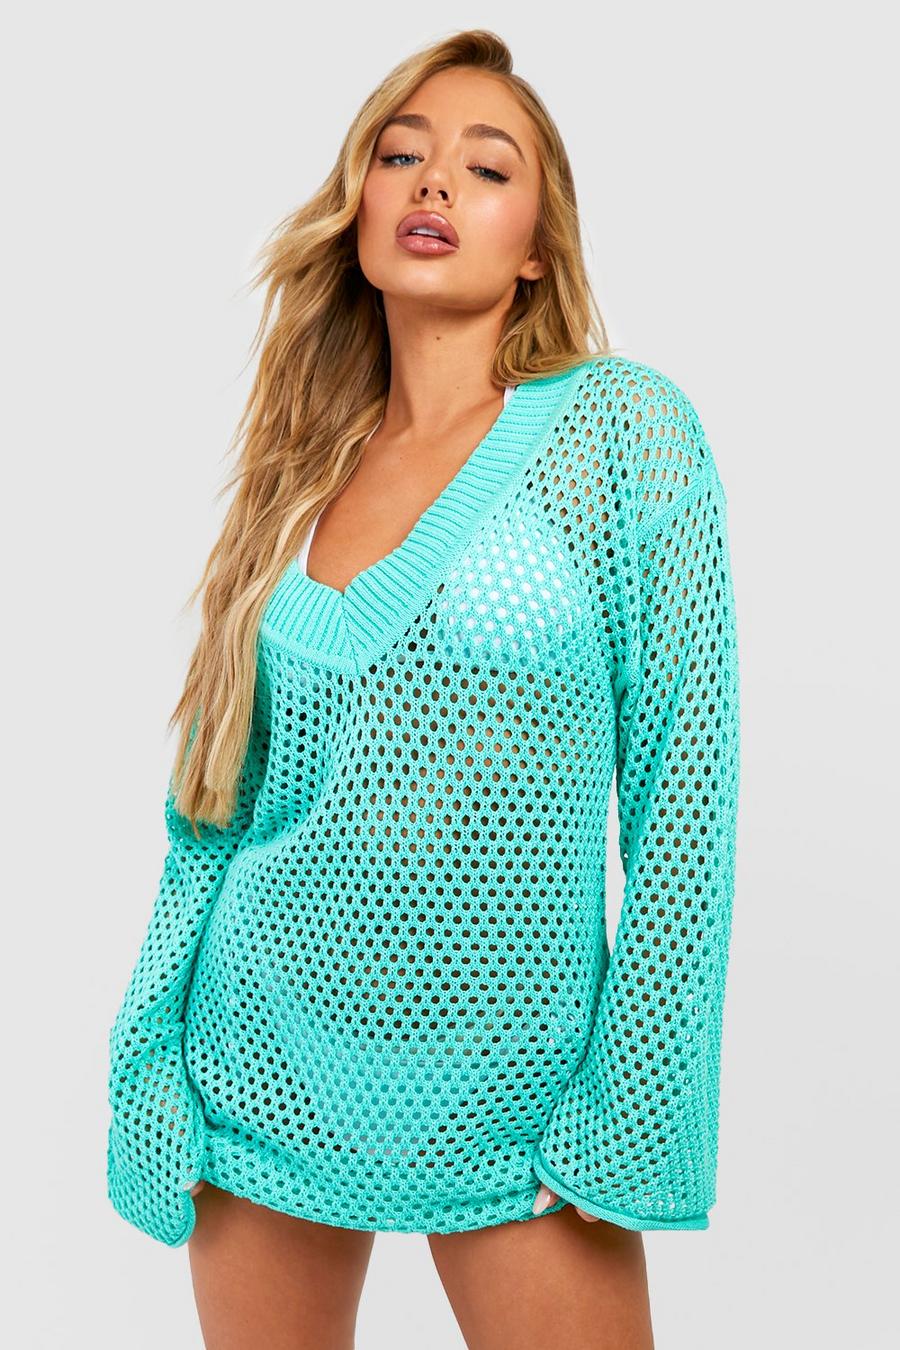 Aqua blue Crochet Plunge Cover Up Beach Dress